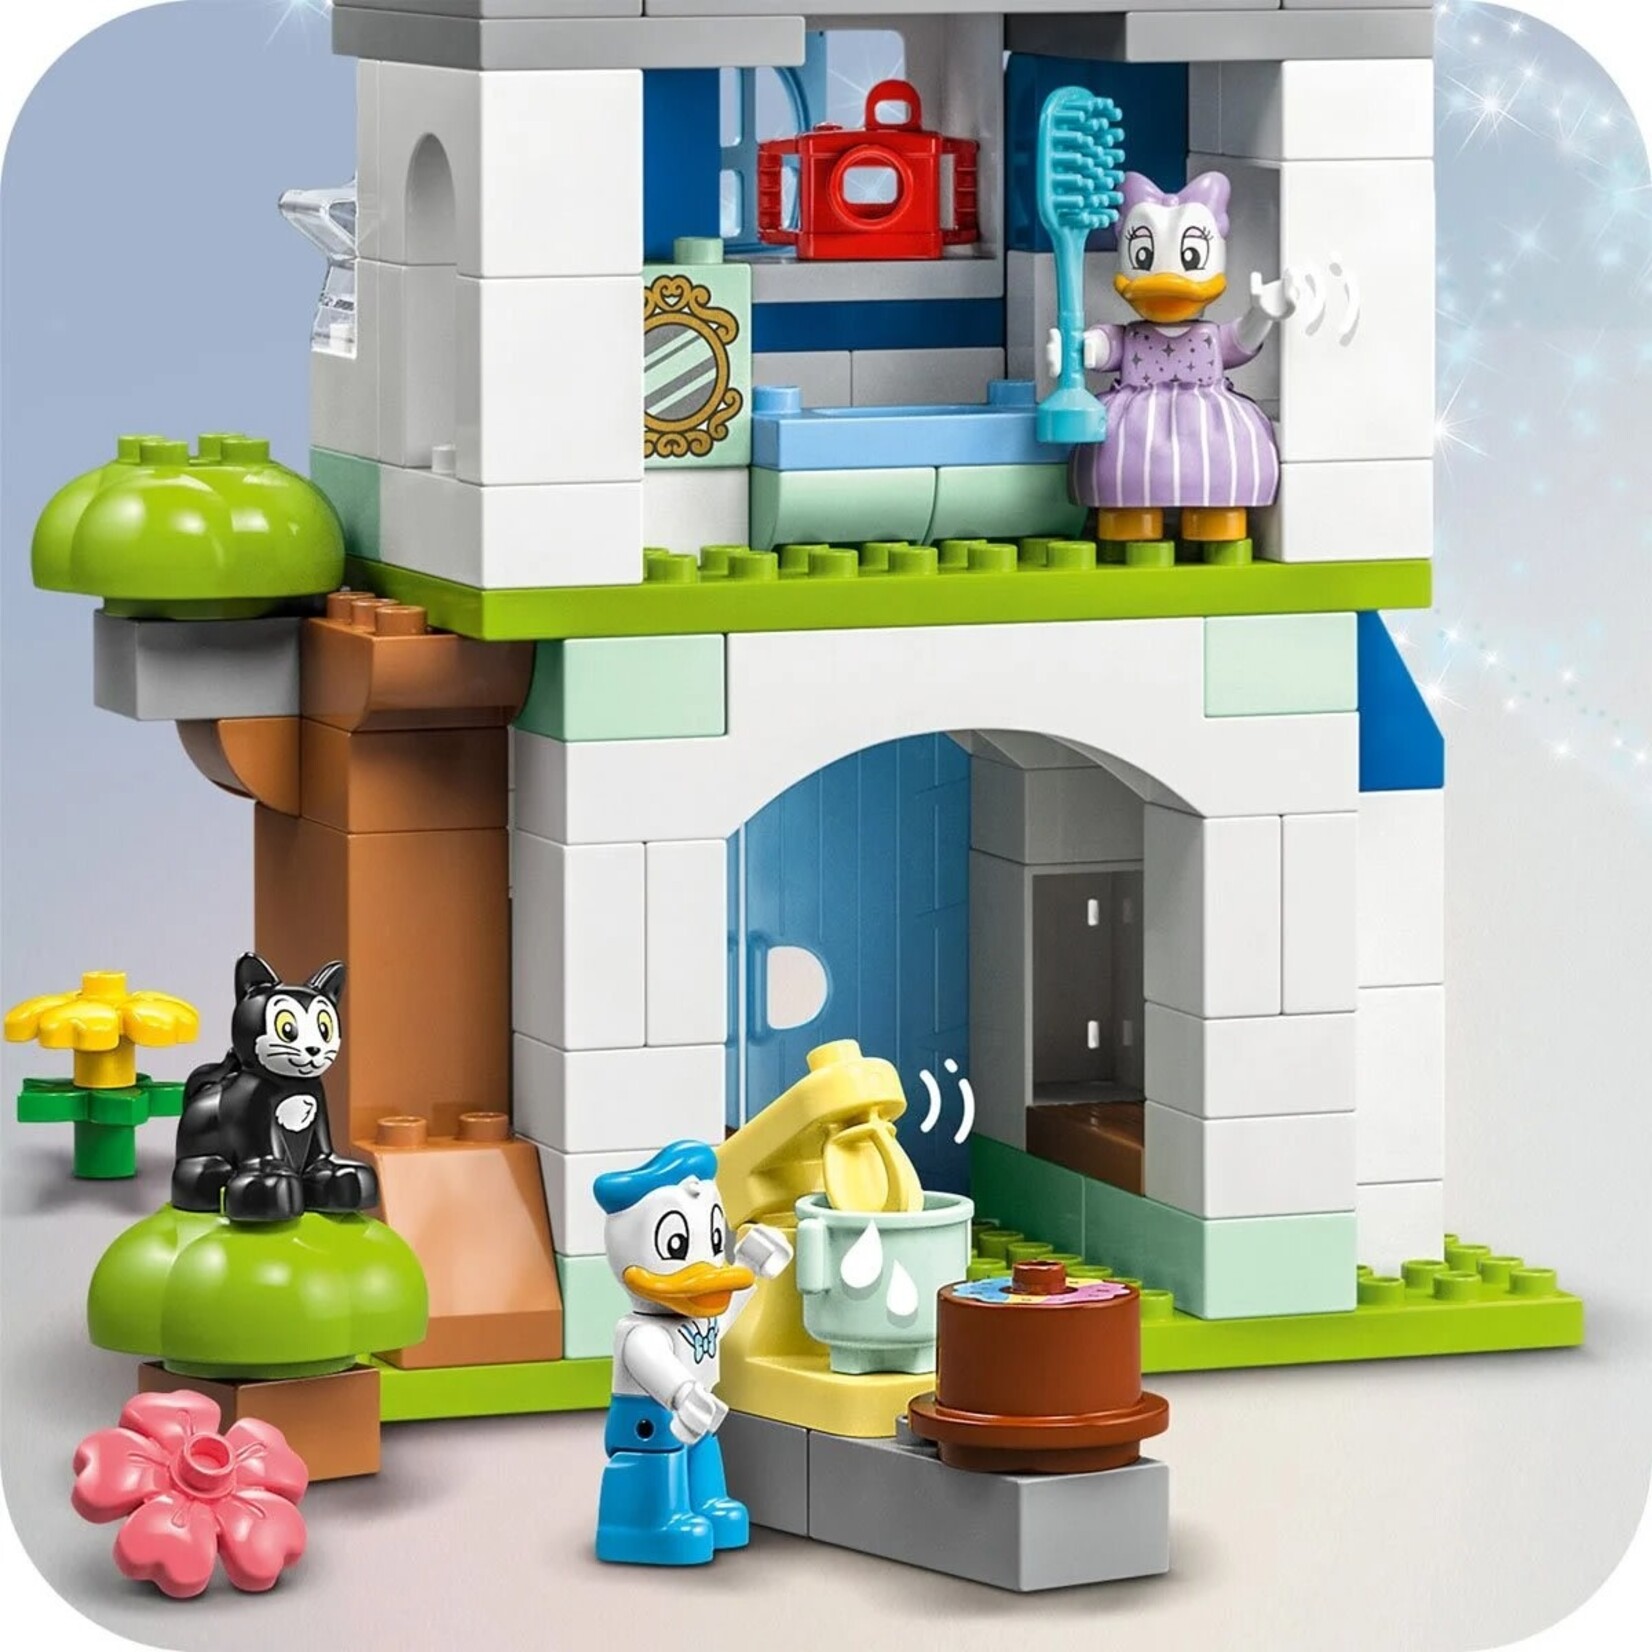 LEGO LEGO DUPLO Disney 100 3-in-1 Magical Castle 10998